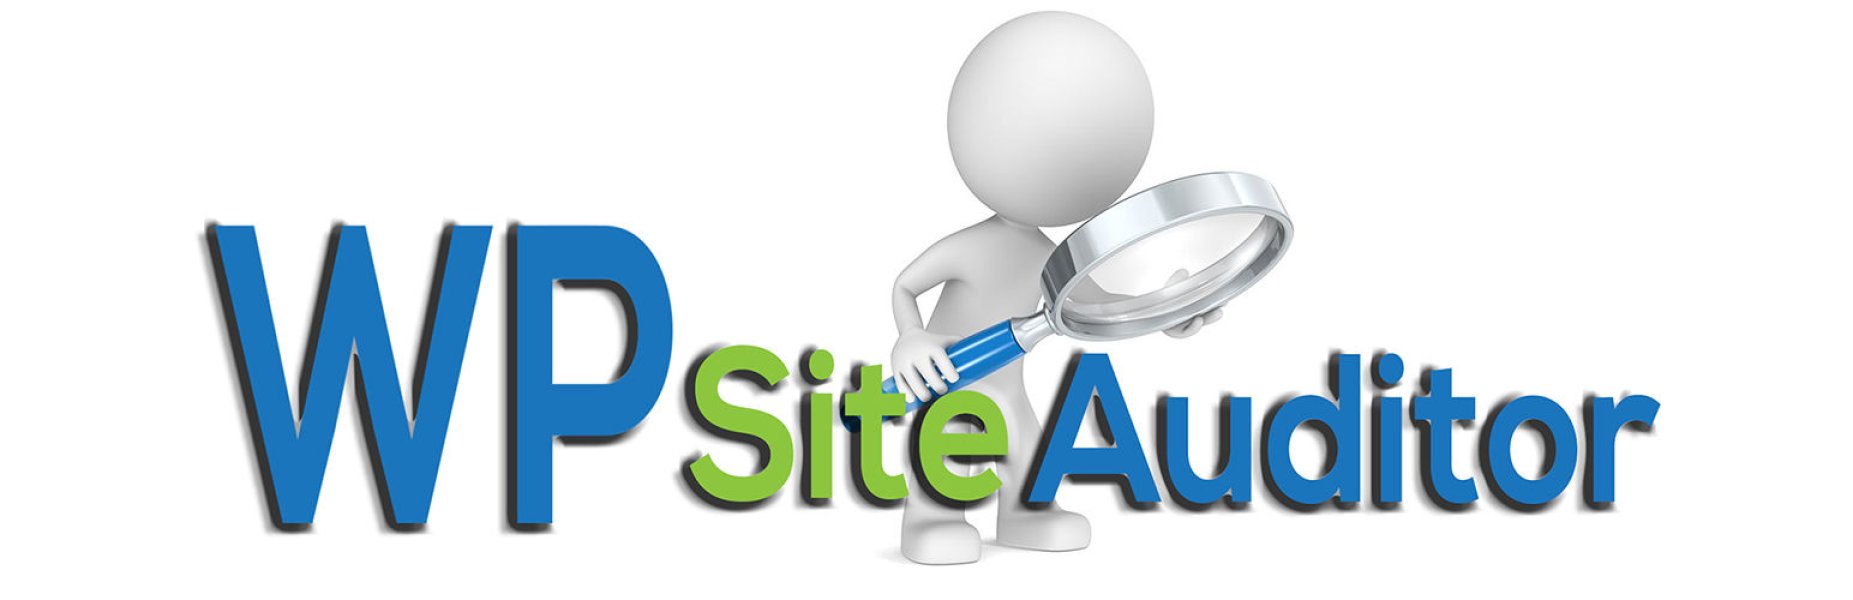 WP Site Auditor Premium - SEO Audit Plugin for Wordpress